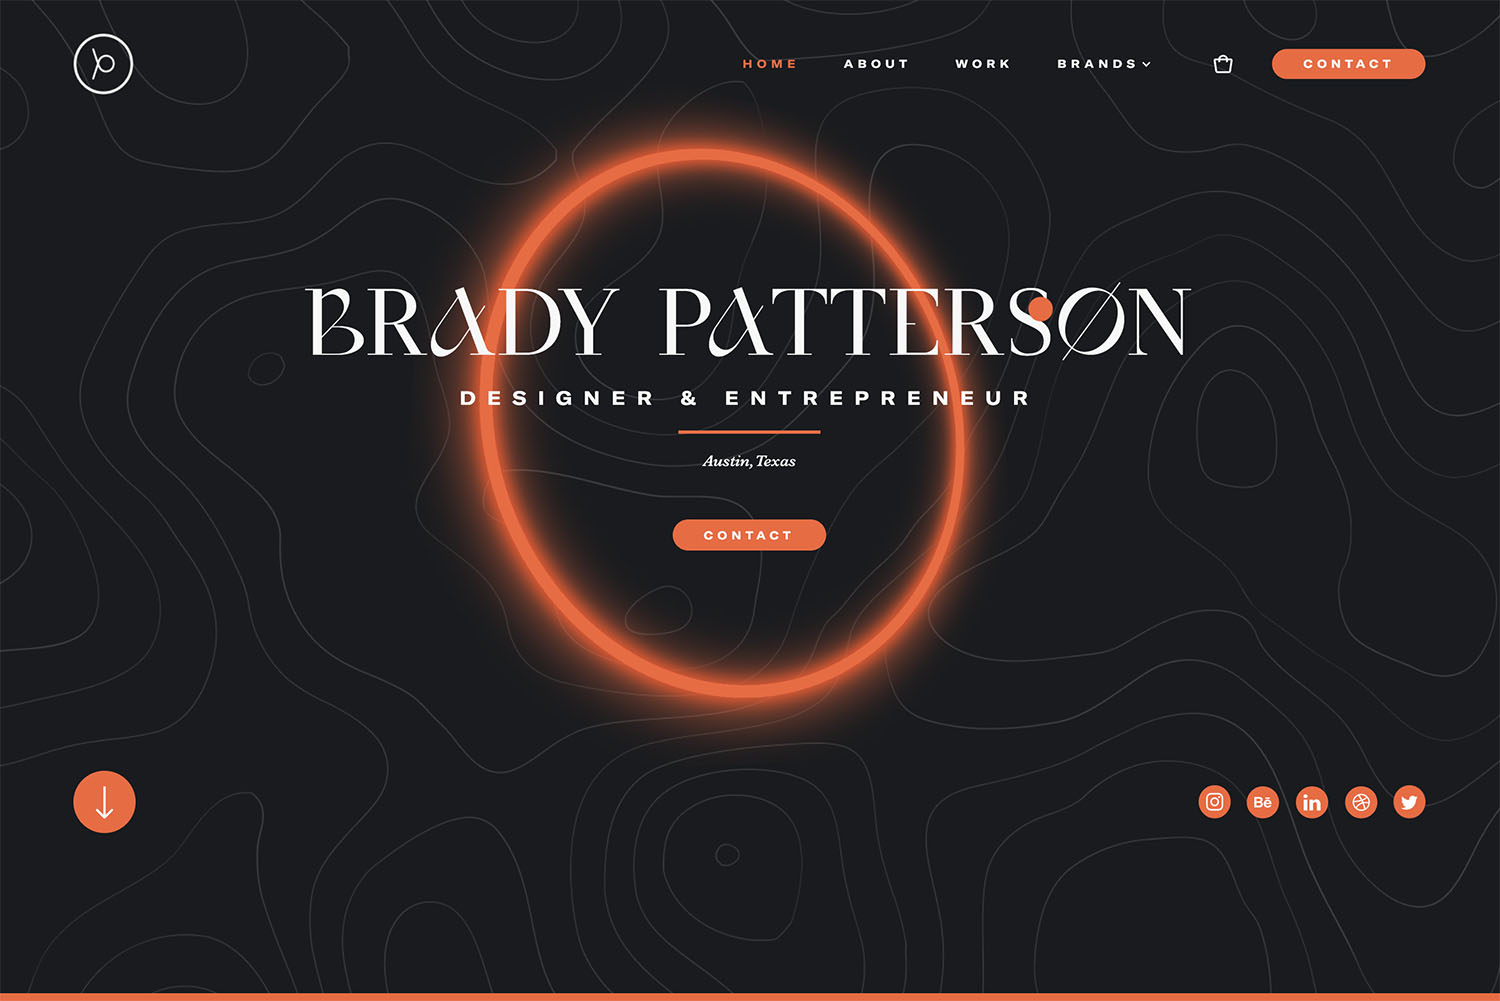 Brady Patterson Portfolio